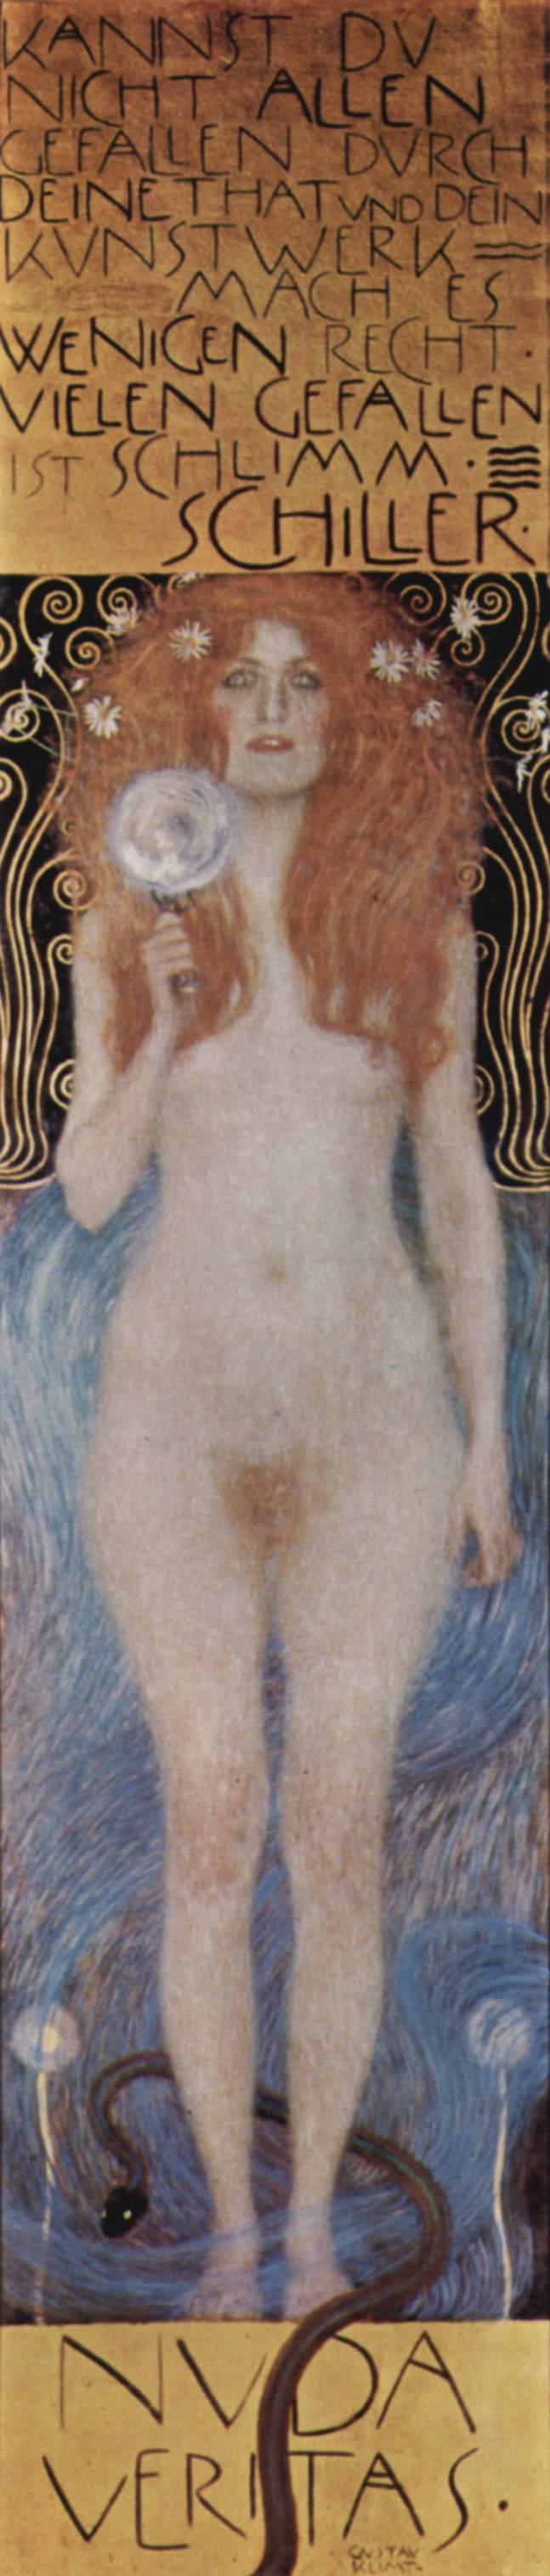 pintura Nuda Veritas - Gustav Klimt